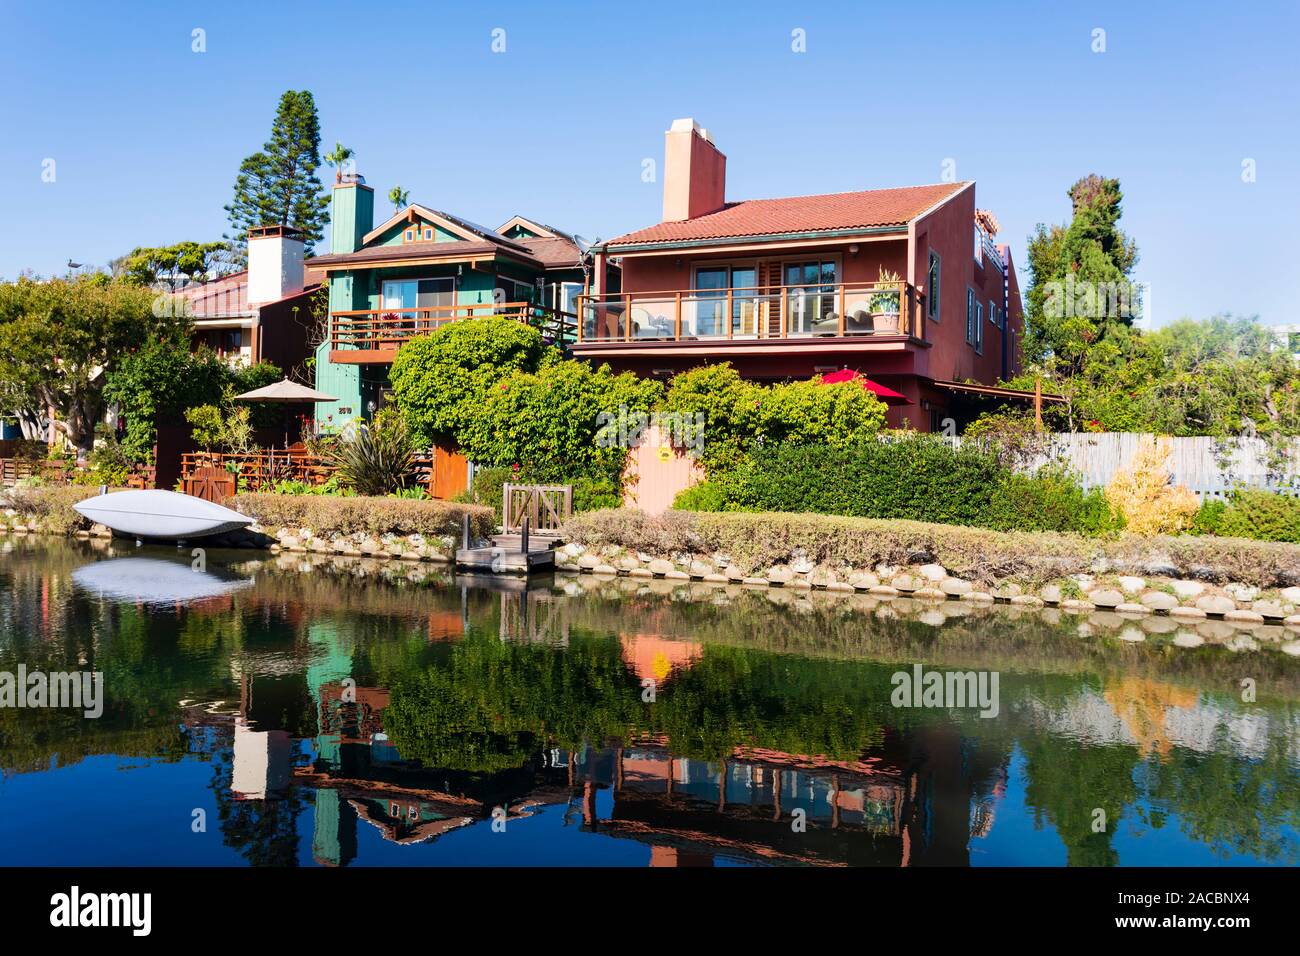 Venedig Kanäle, Santa Monica, Kalifornien, Vereinigte Staaten von Amerika. USA. Oktober 2019 Stockfoto